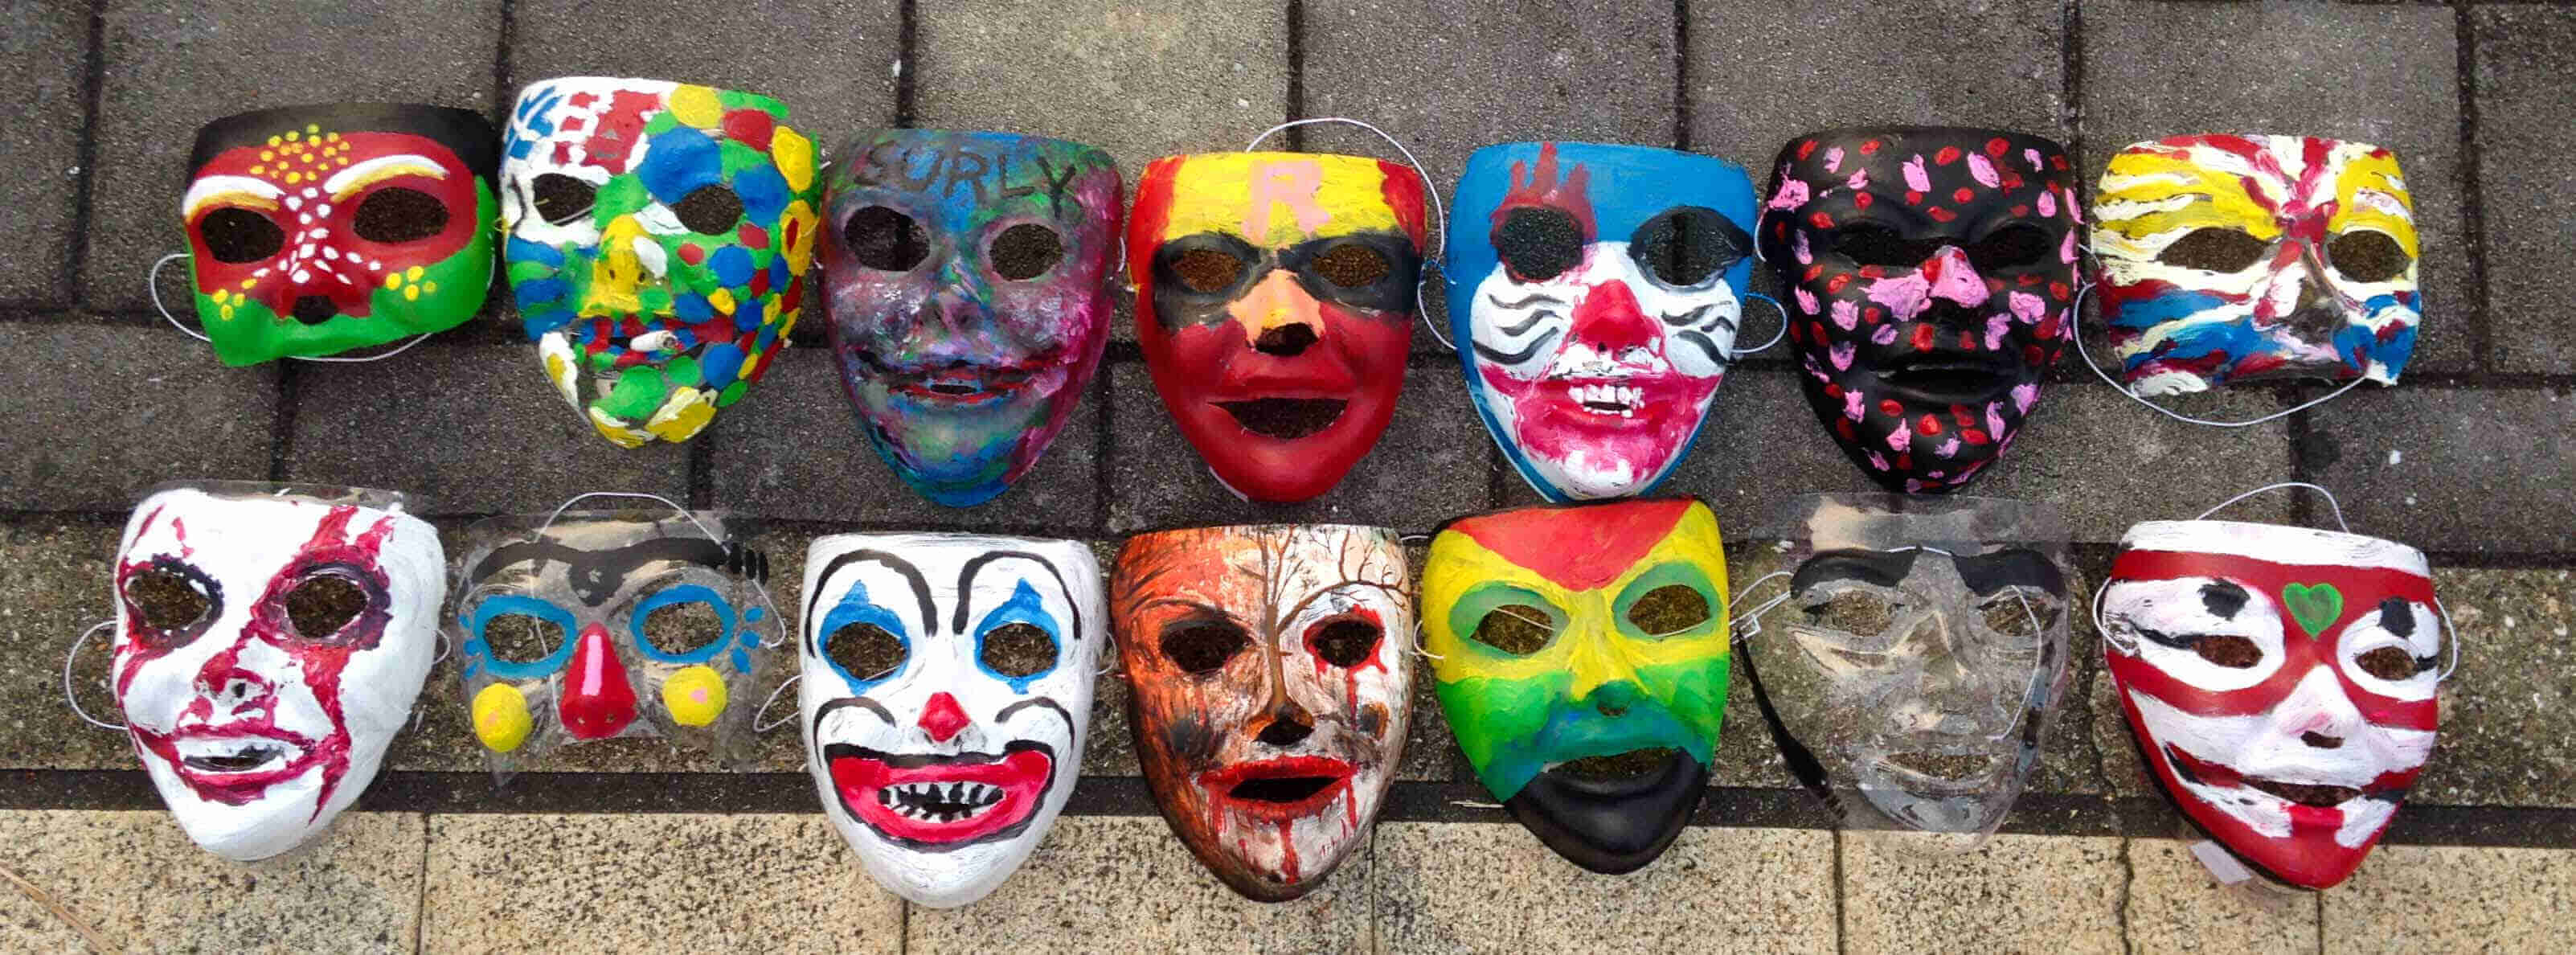 Downward view of masks, lined up on a brick sidewalk